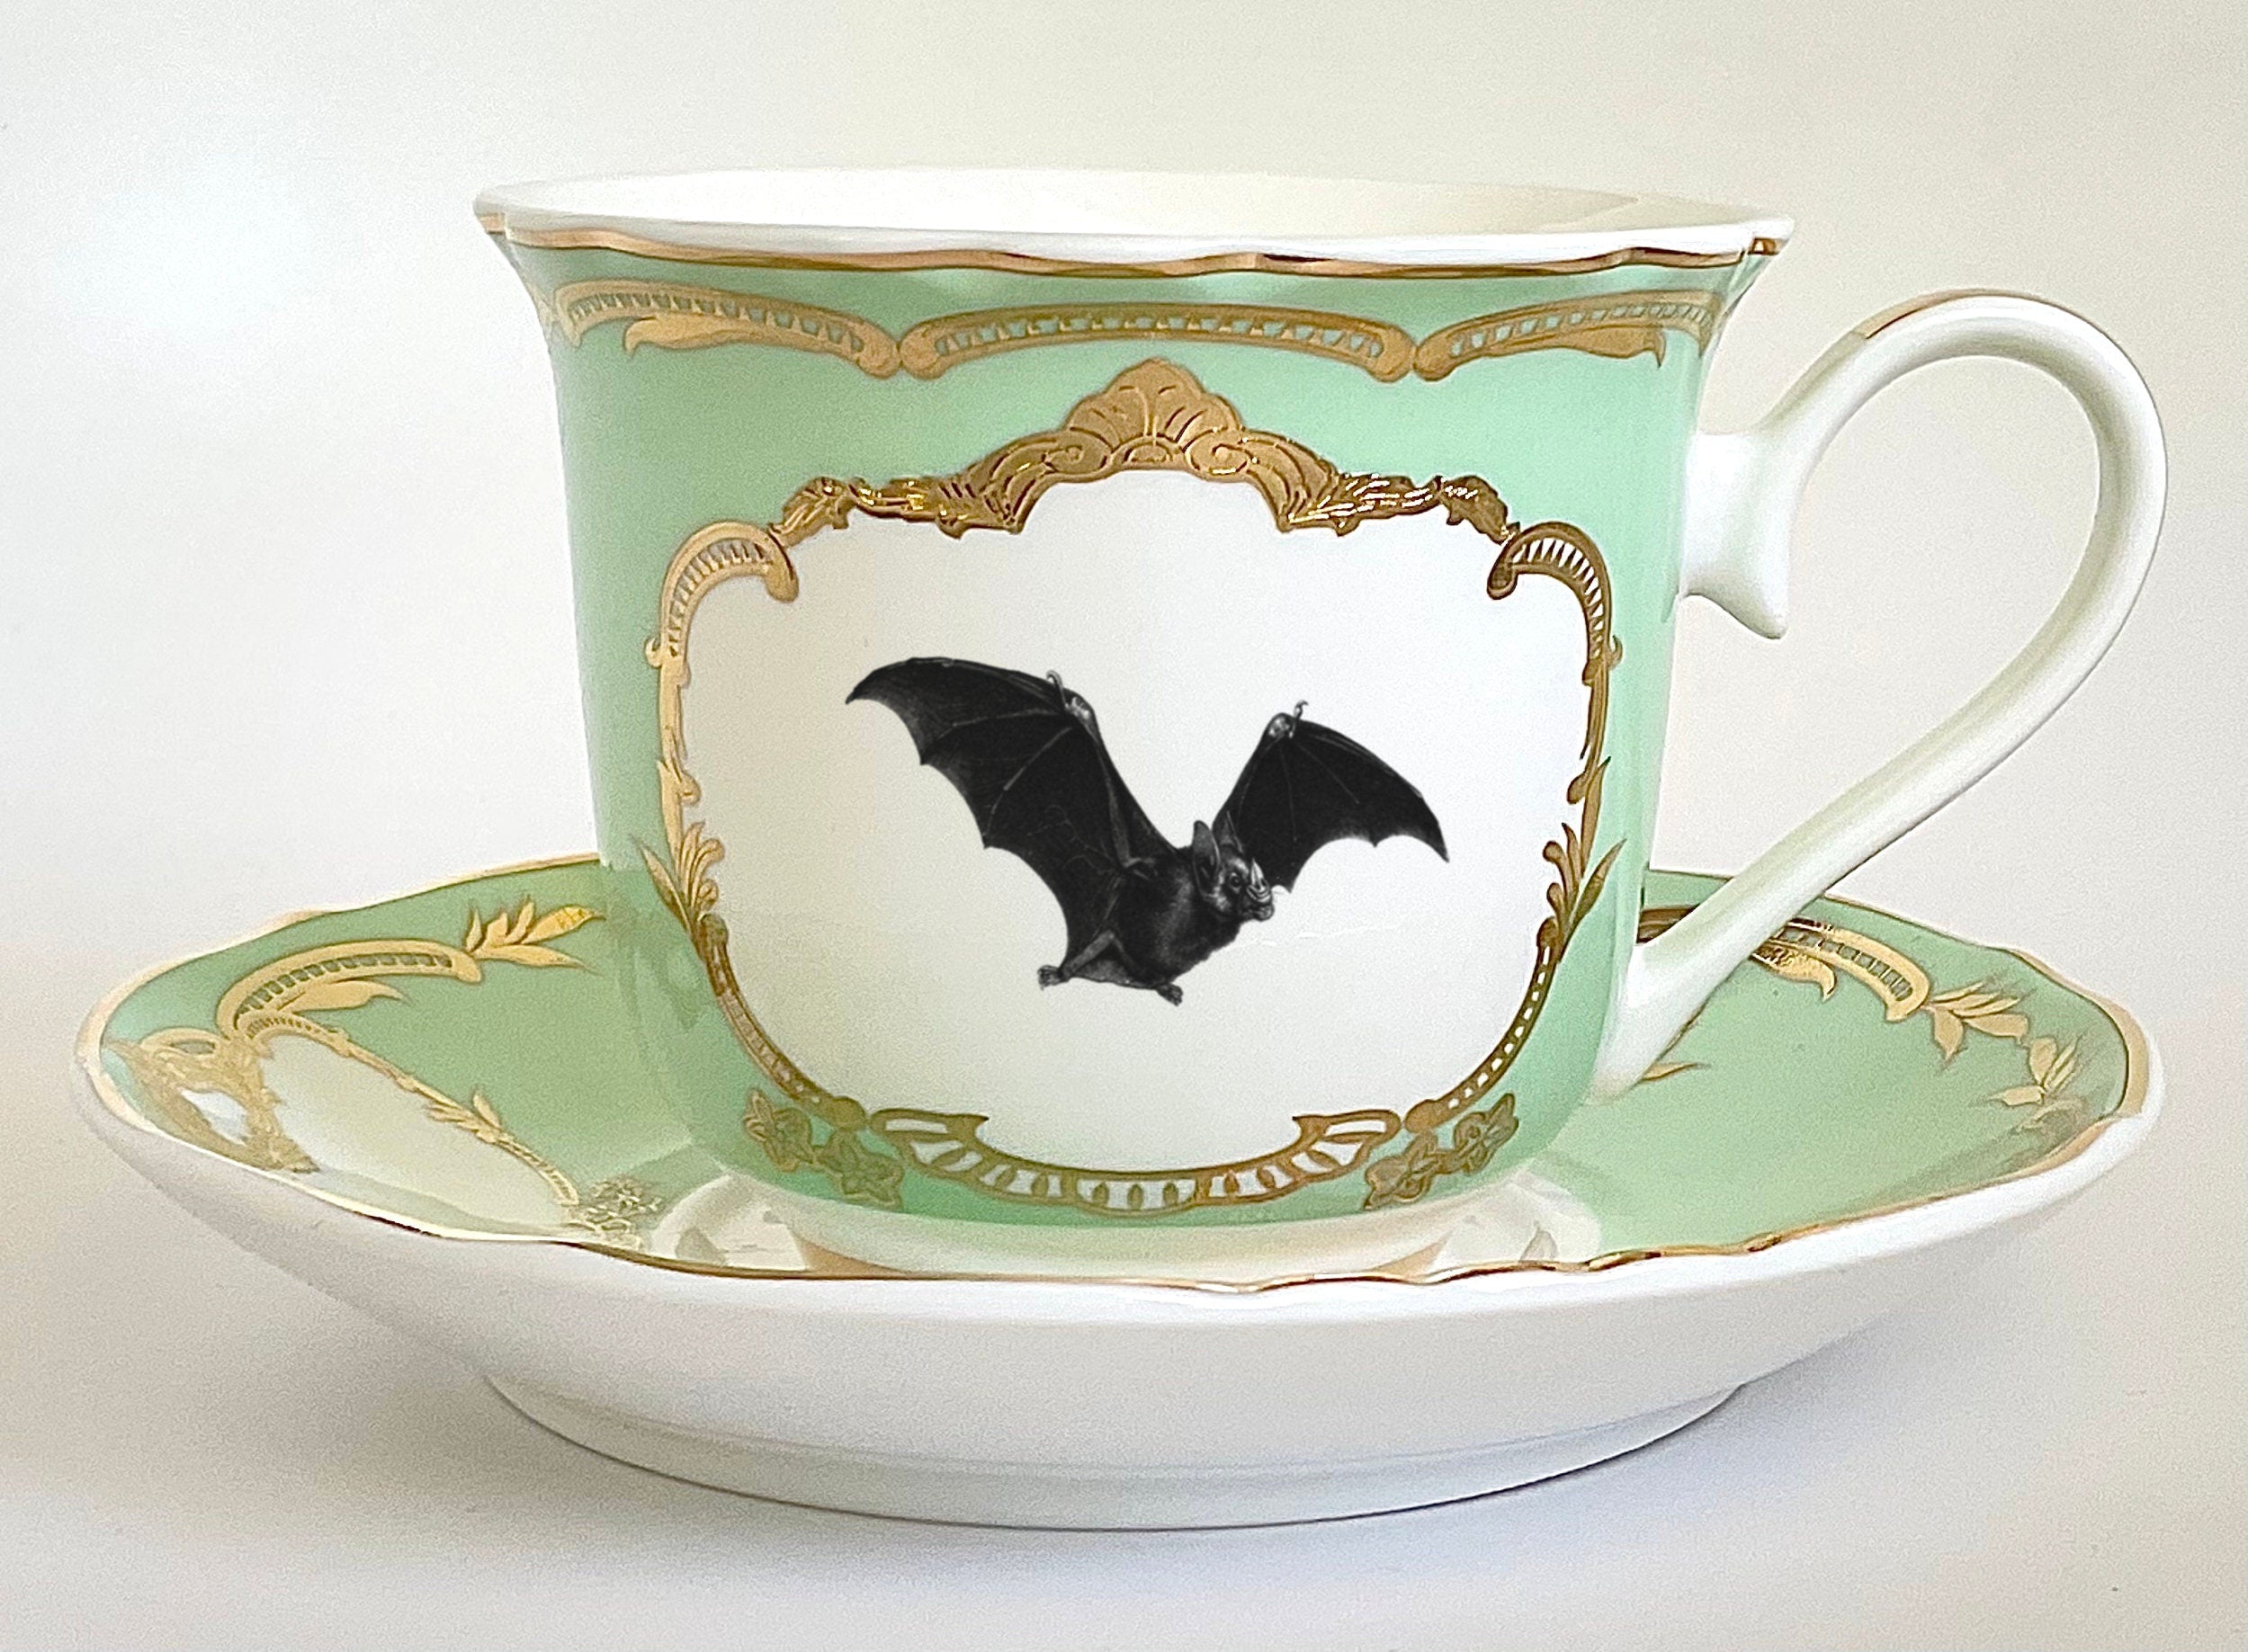 Flying Witch Teacup & Saucer Set, 8 oz, vegan bone china